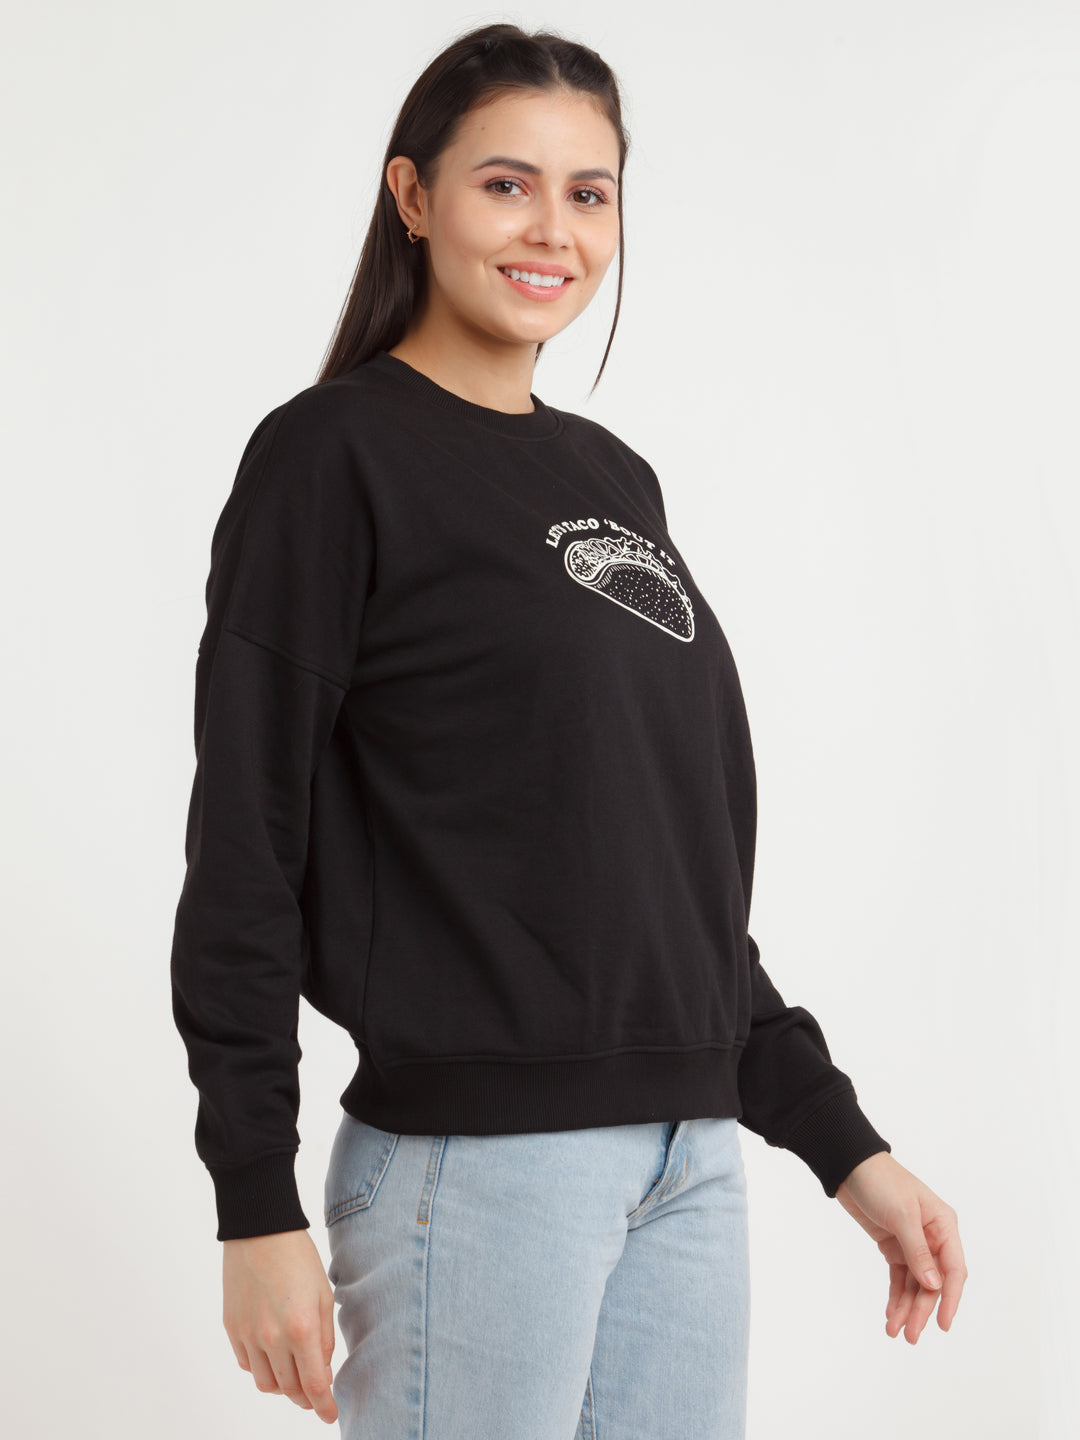 Black Printed Sweatshirt For Women